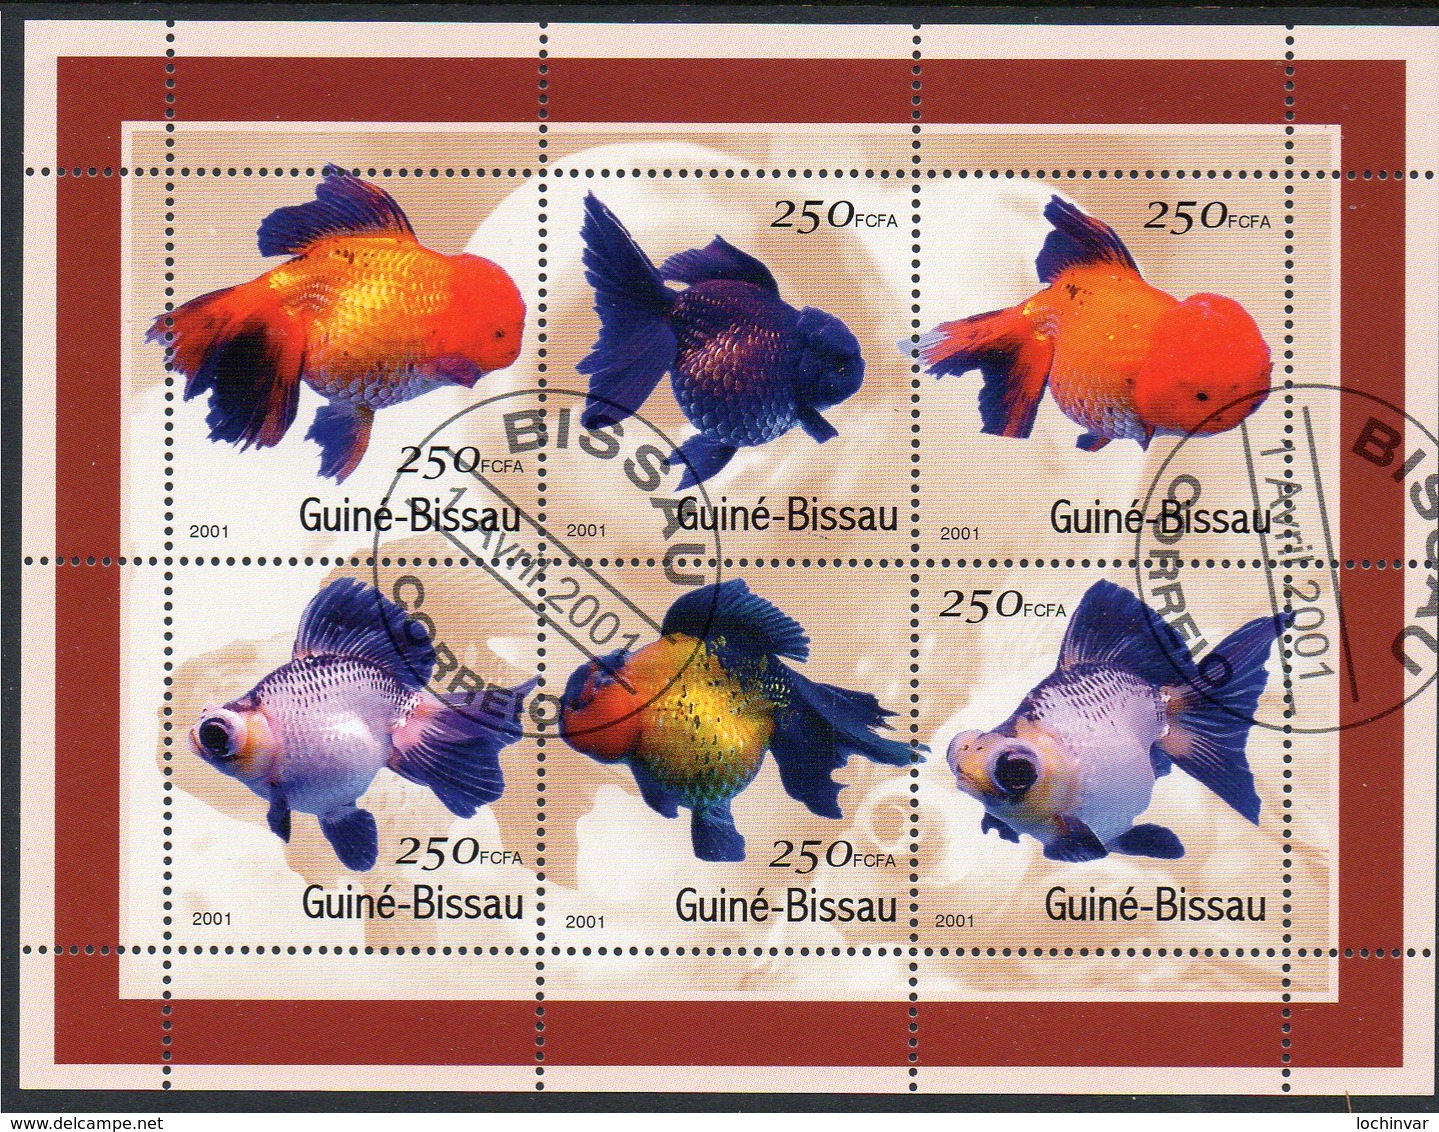 GUINEA-BISSAU, 2001 FISH MINISHEET CTO - Guinea-Bissau